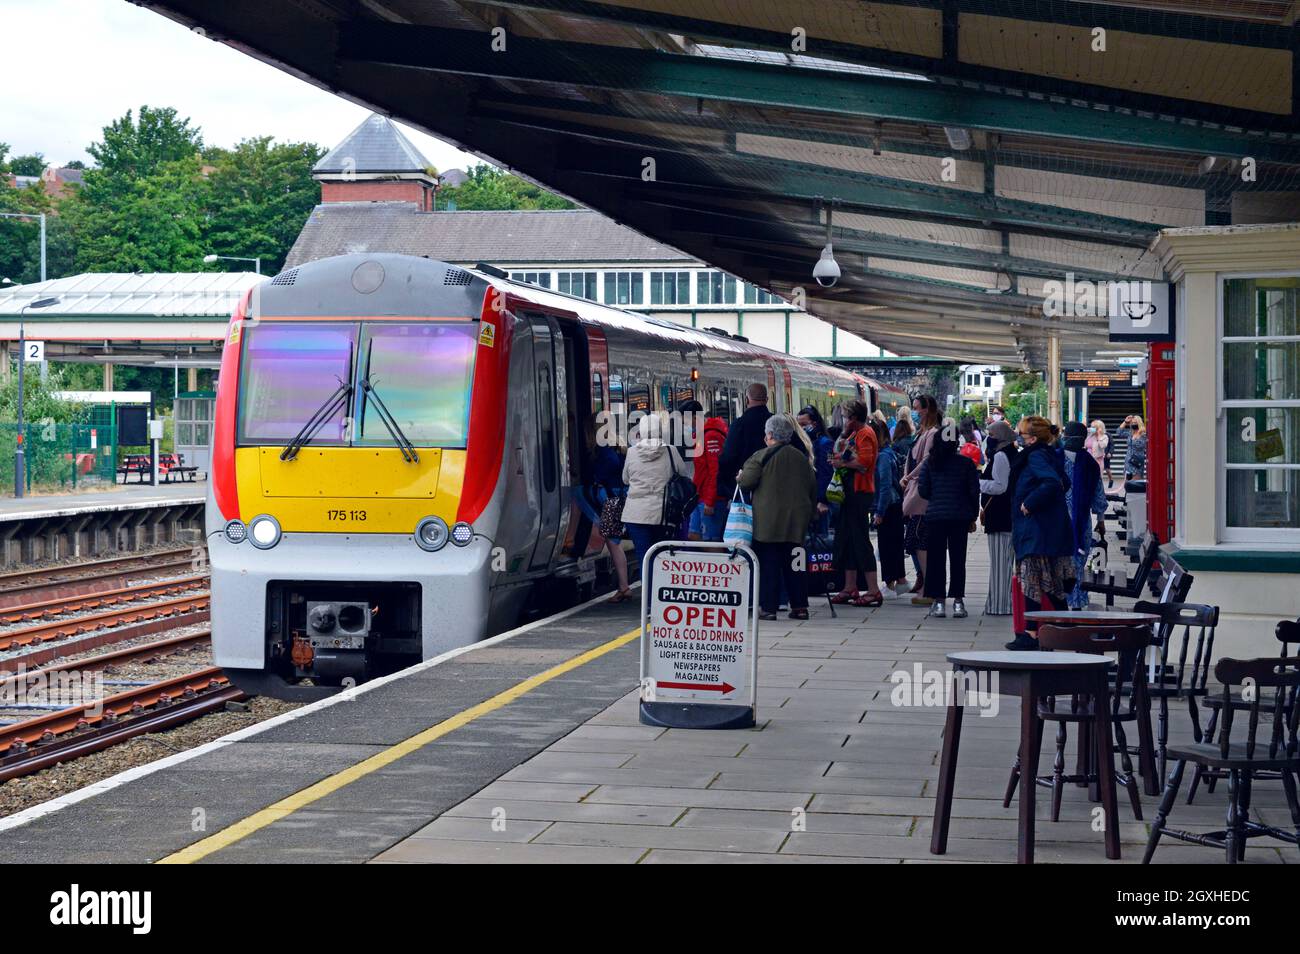 BANGOR, GWYNEDD, WALES. 06-26-21. Der Bahnhof, Transport for Wales DMU 175113 mit einem Service nach Chester. Stockfoto